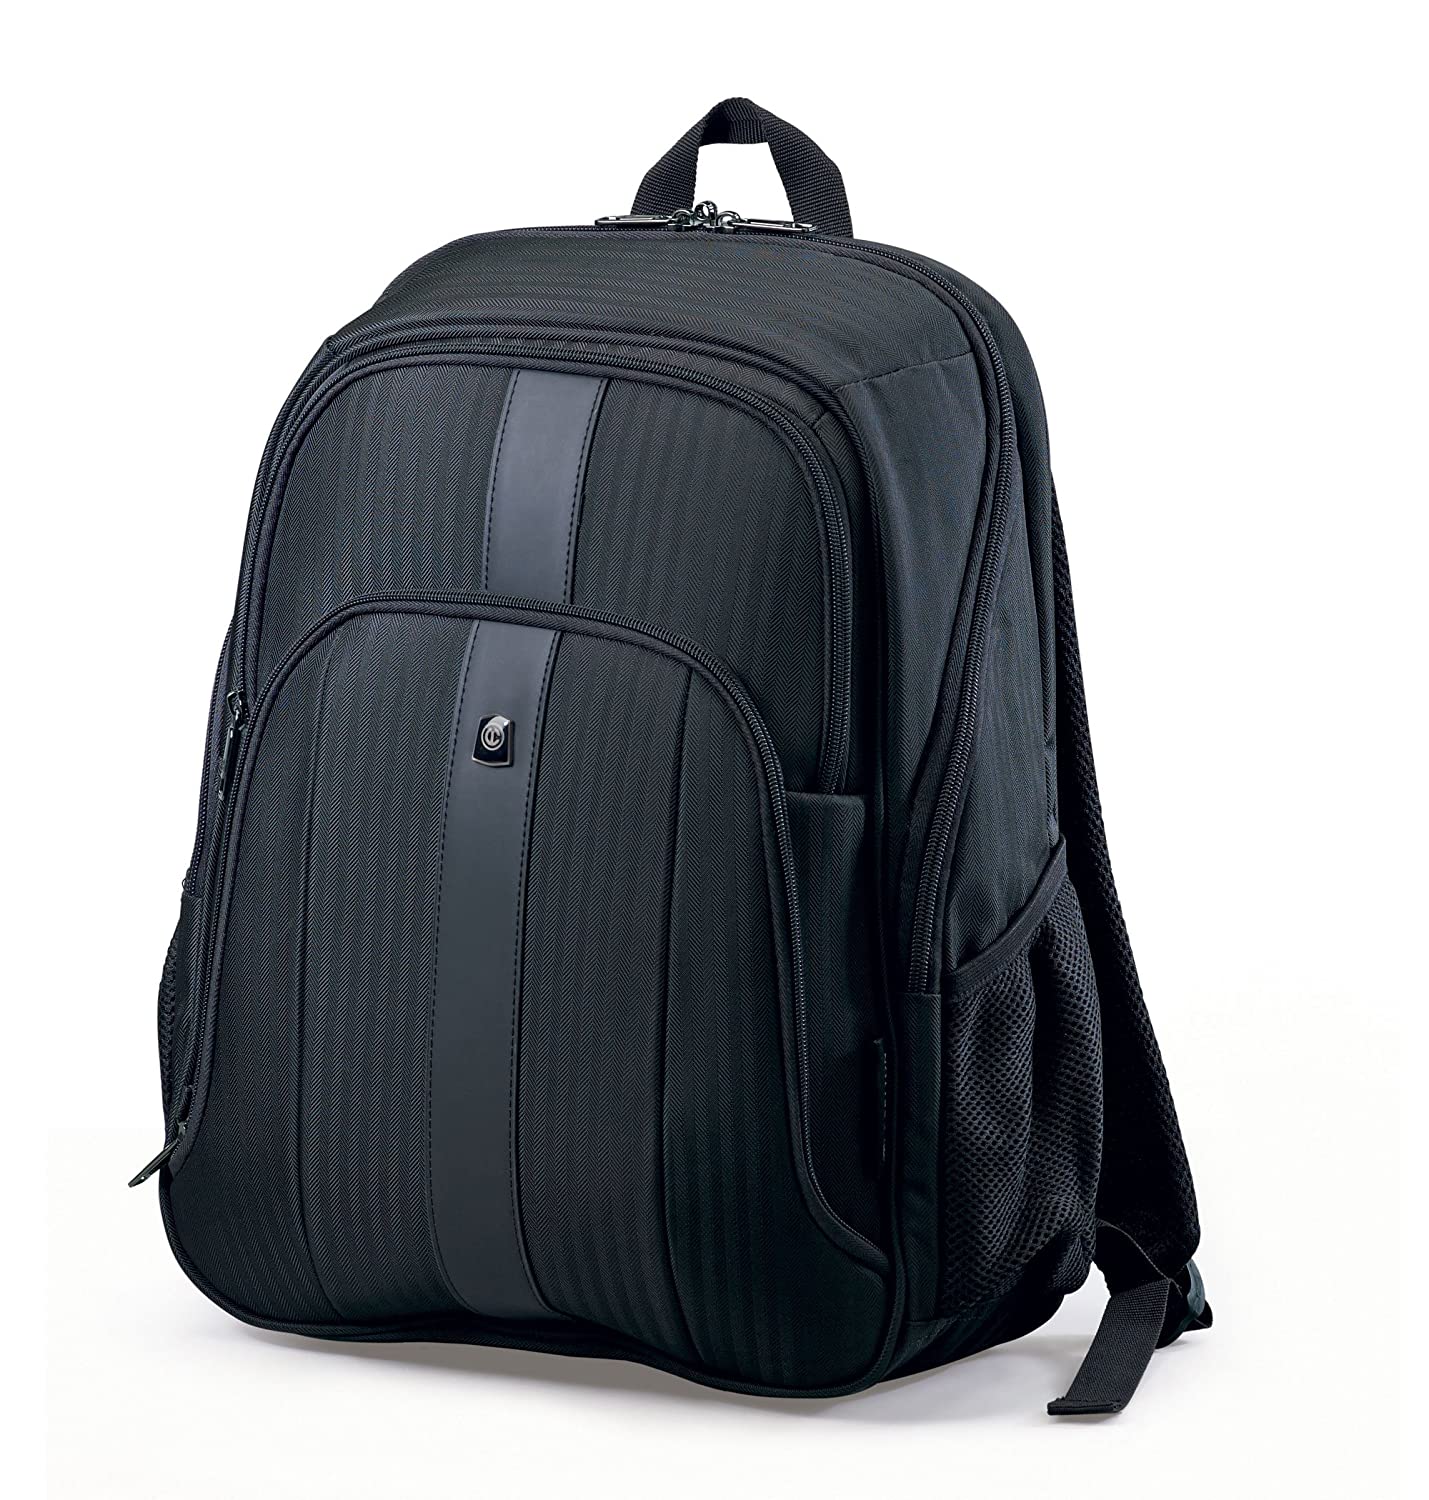 Carlton Derby Laptop Backpack Black